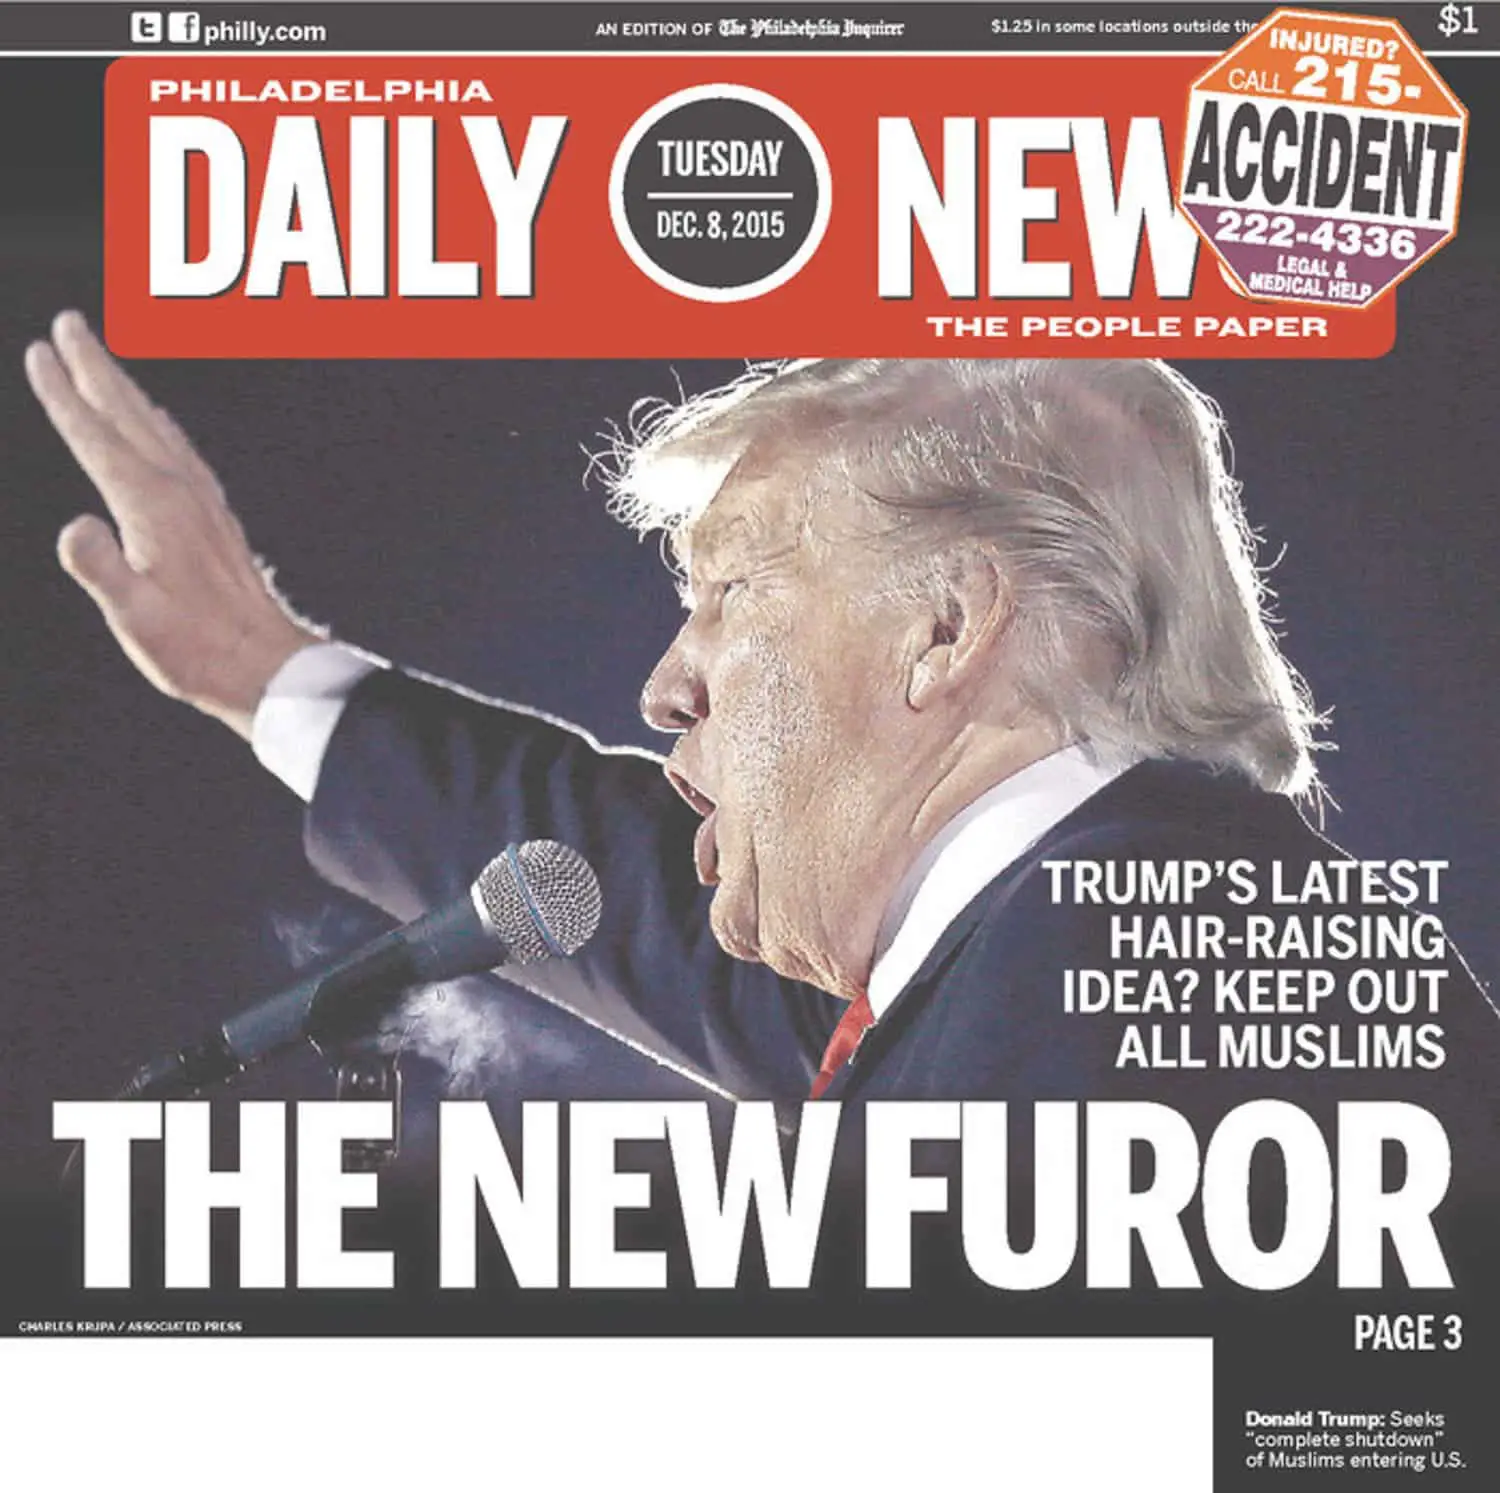 Philadelphia Daily News Calls Donald Trump " the New Furor" 